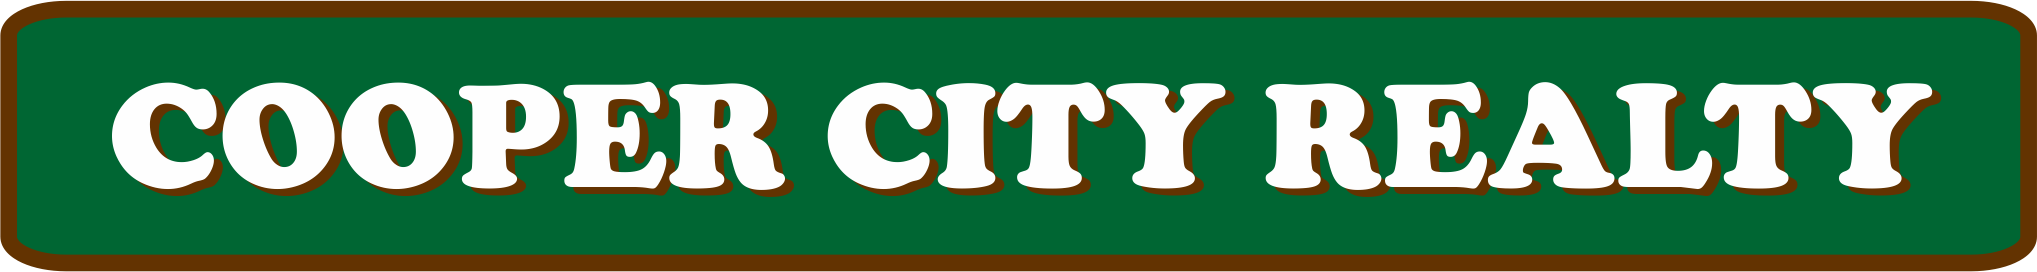 Cooper City Realty  logo